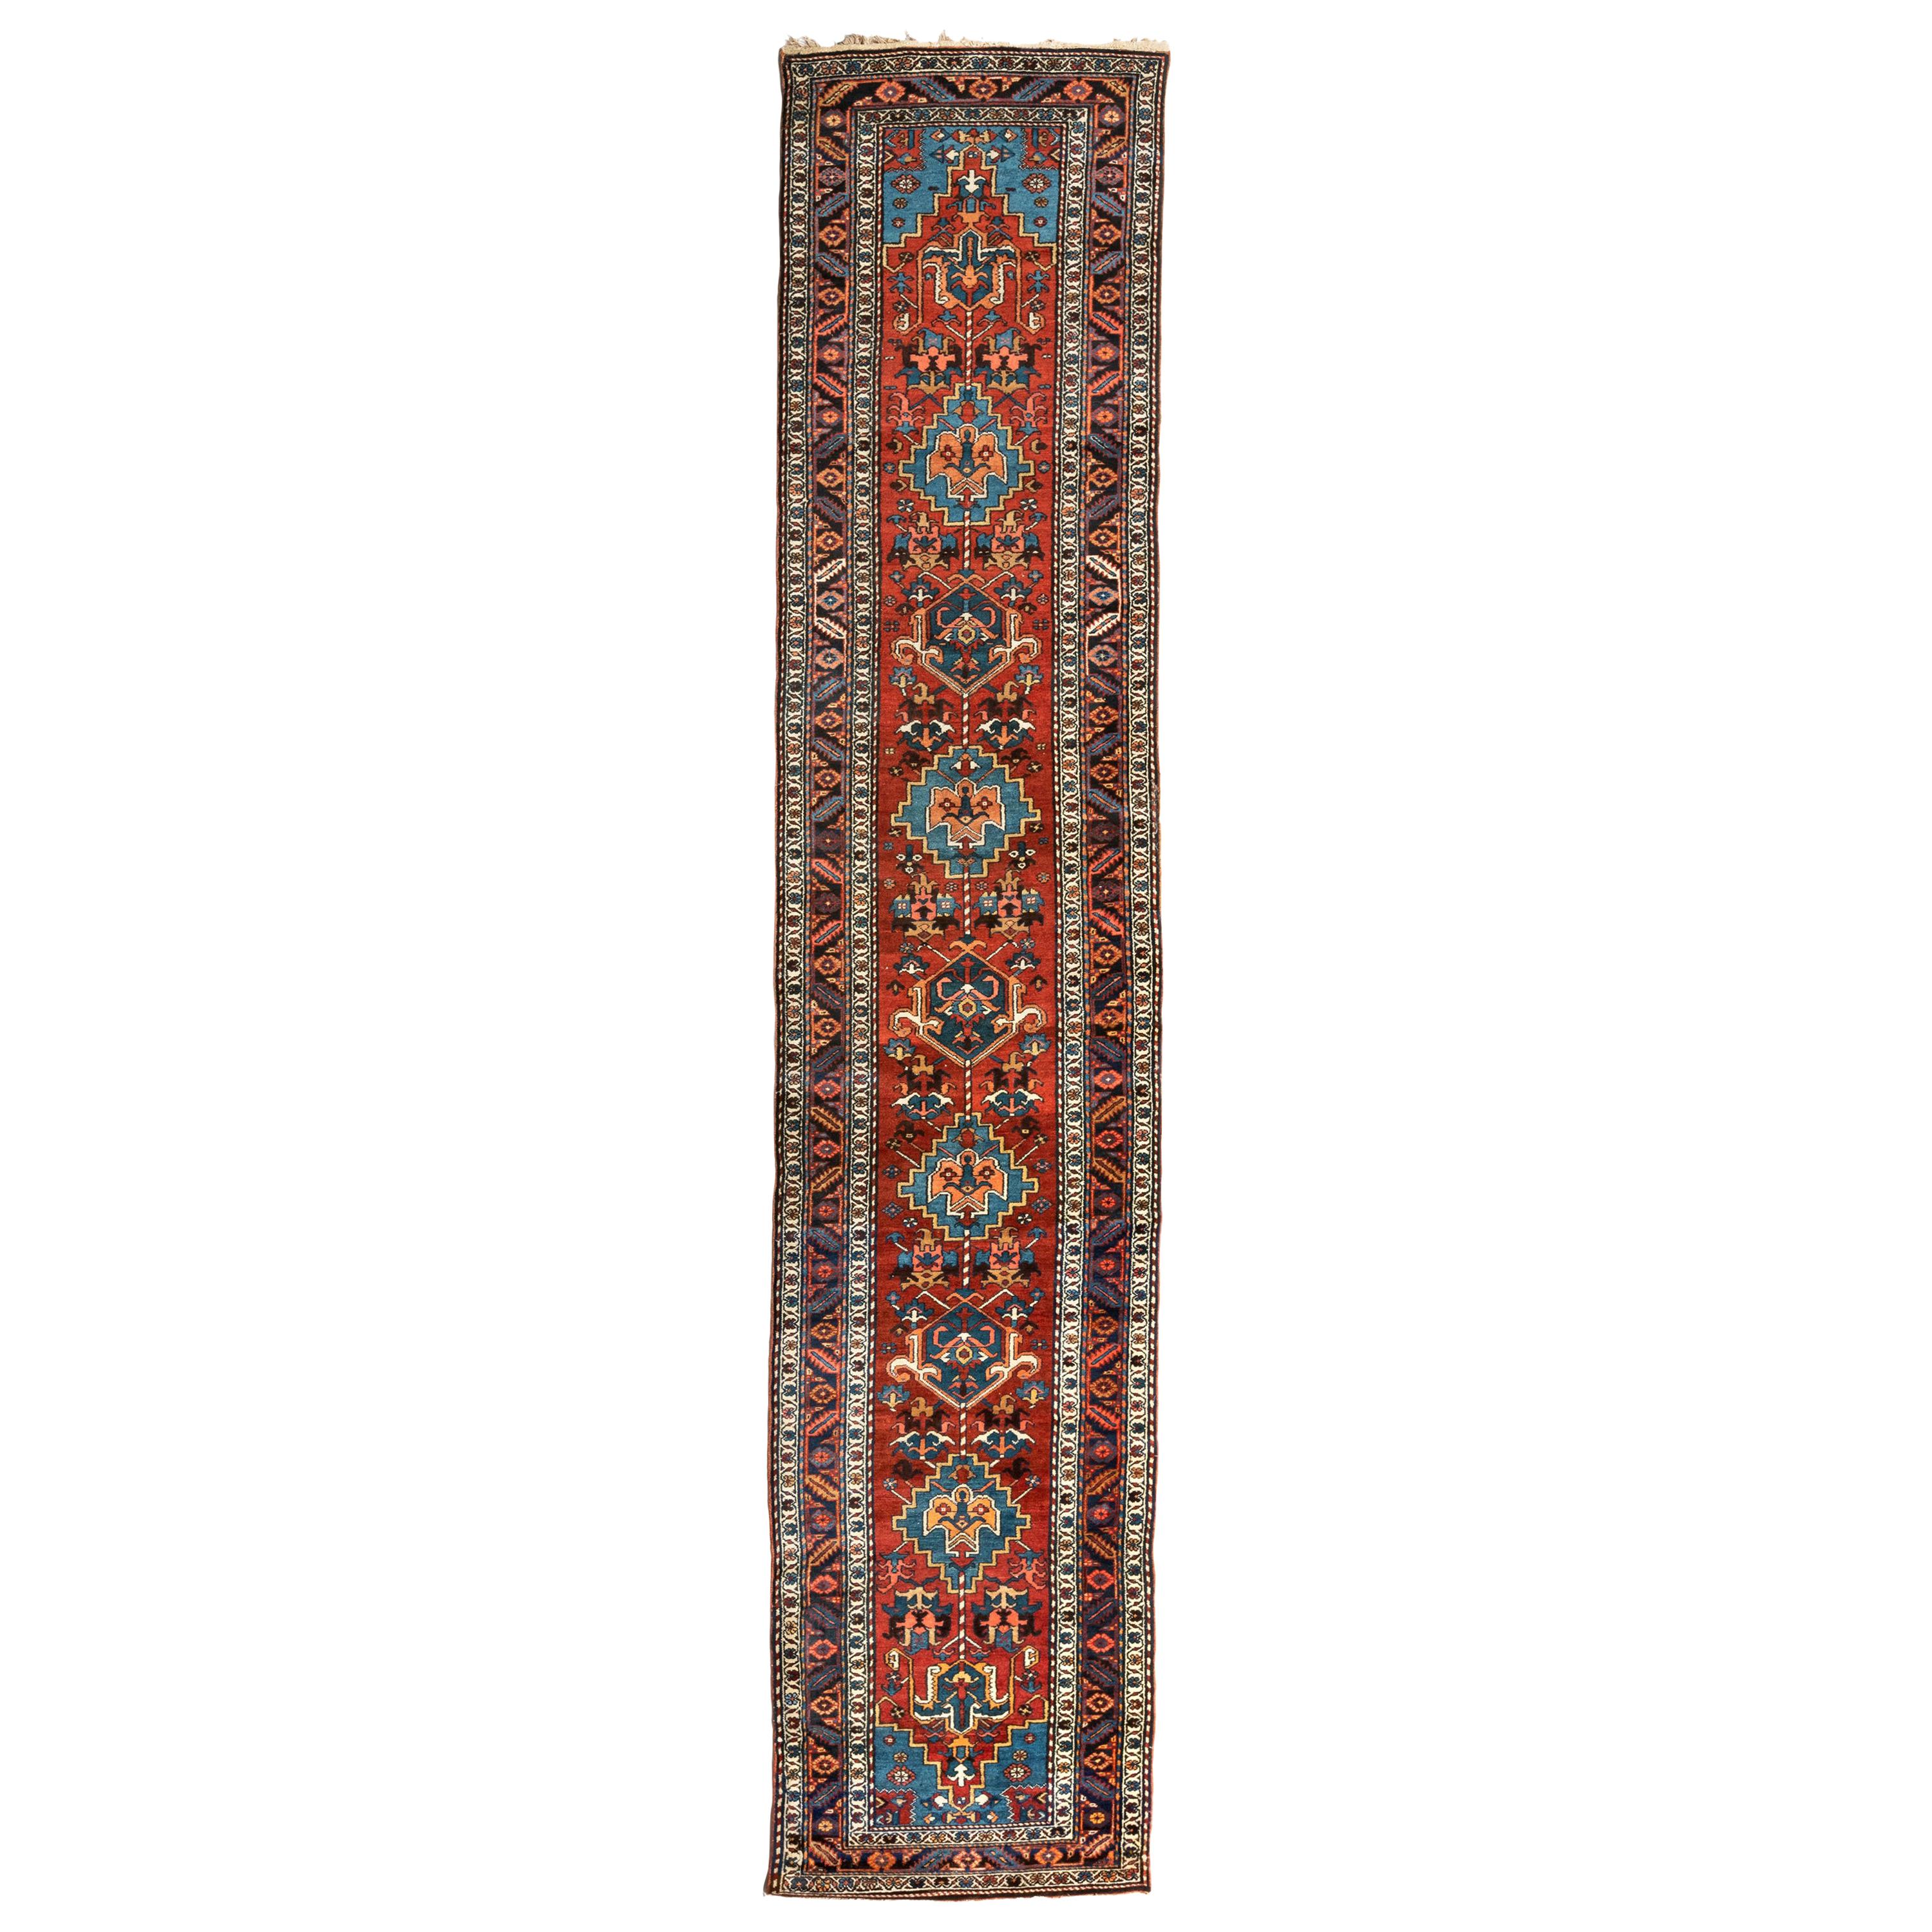 Antique Persian Burgundy Blue Geometric Tribal Heriz Runner Rug circa 1920-1930s For Sale